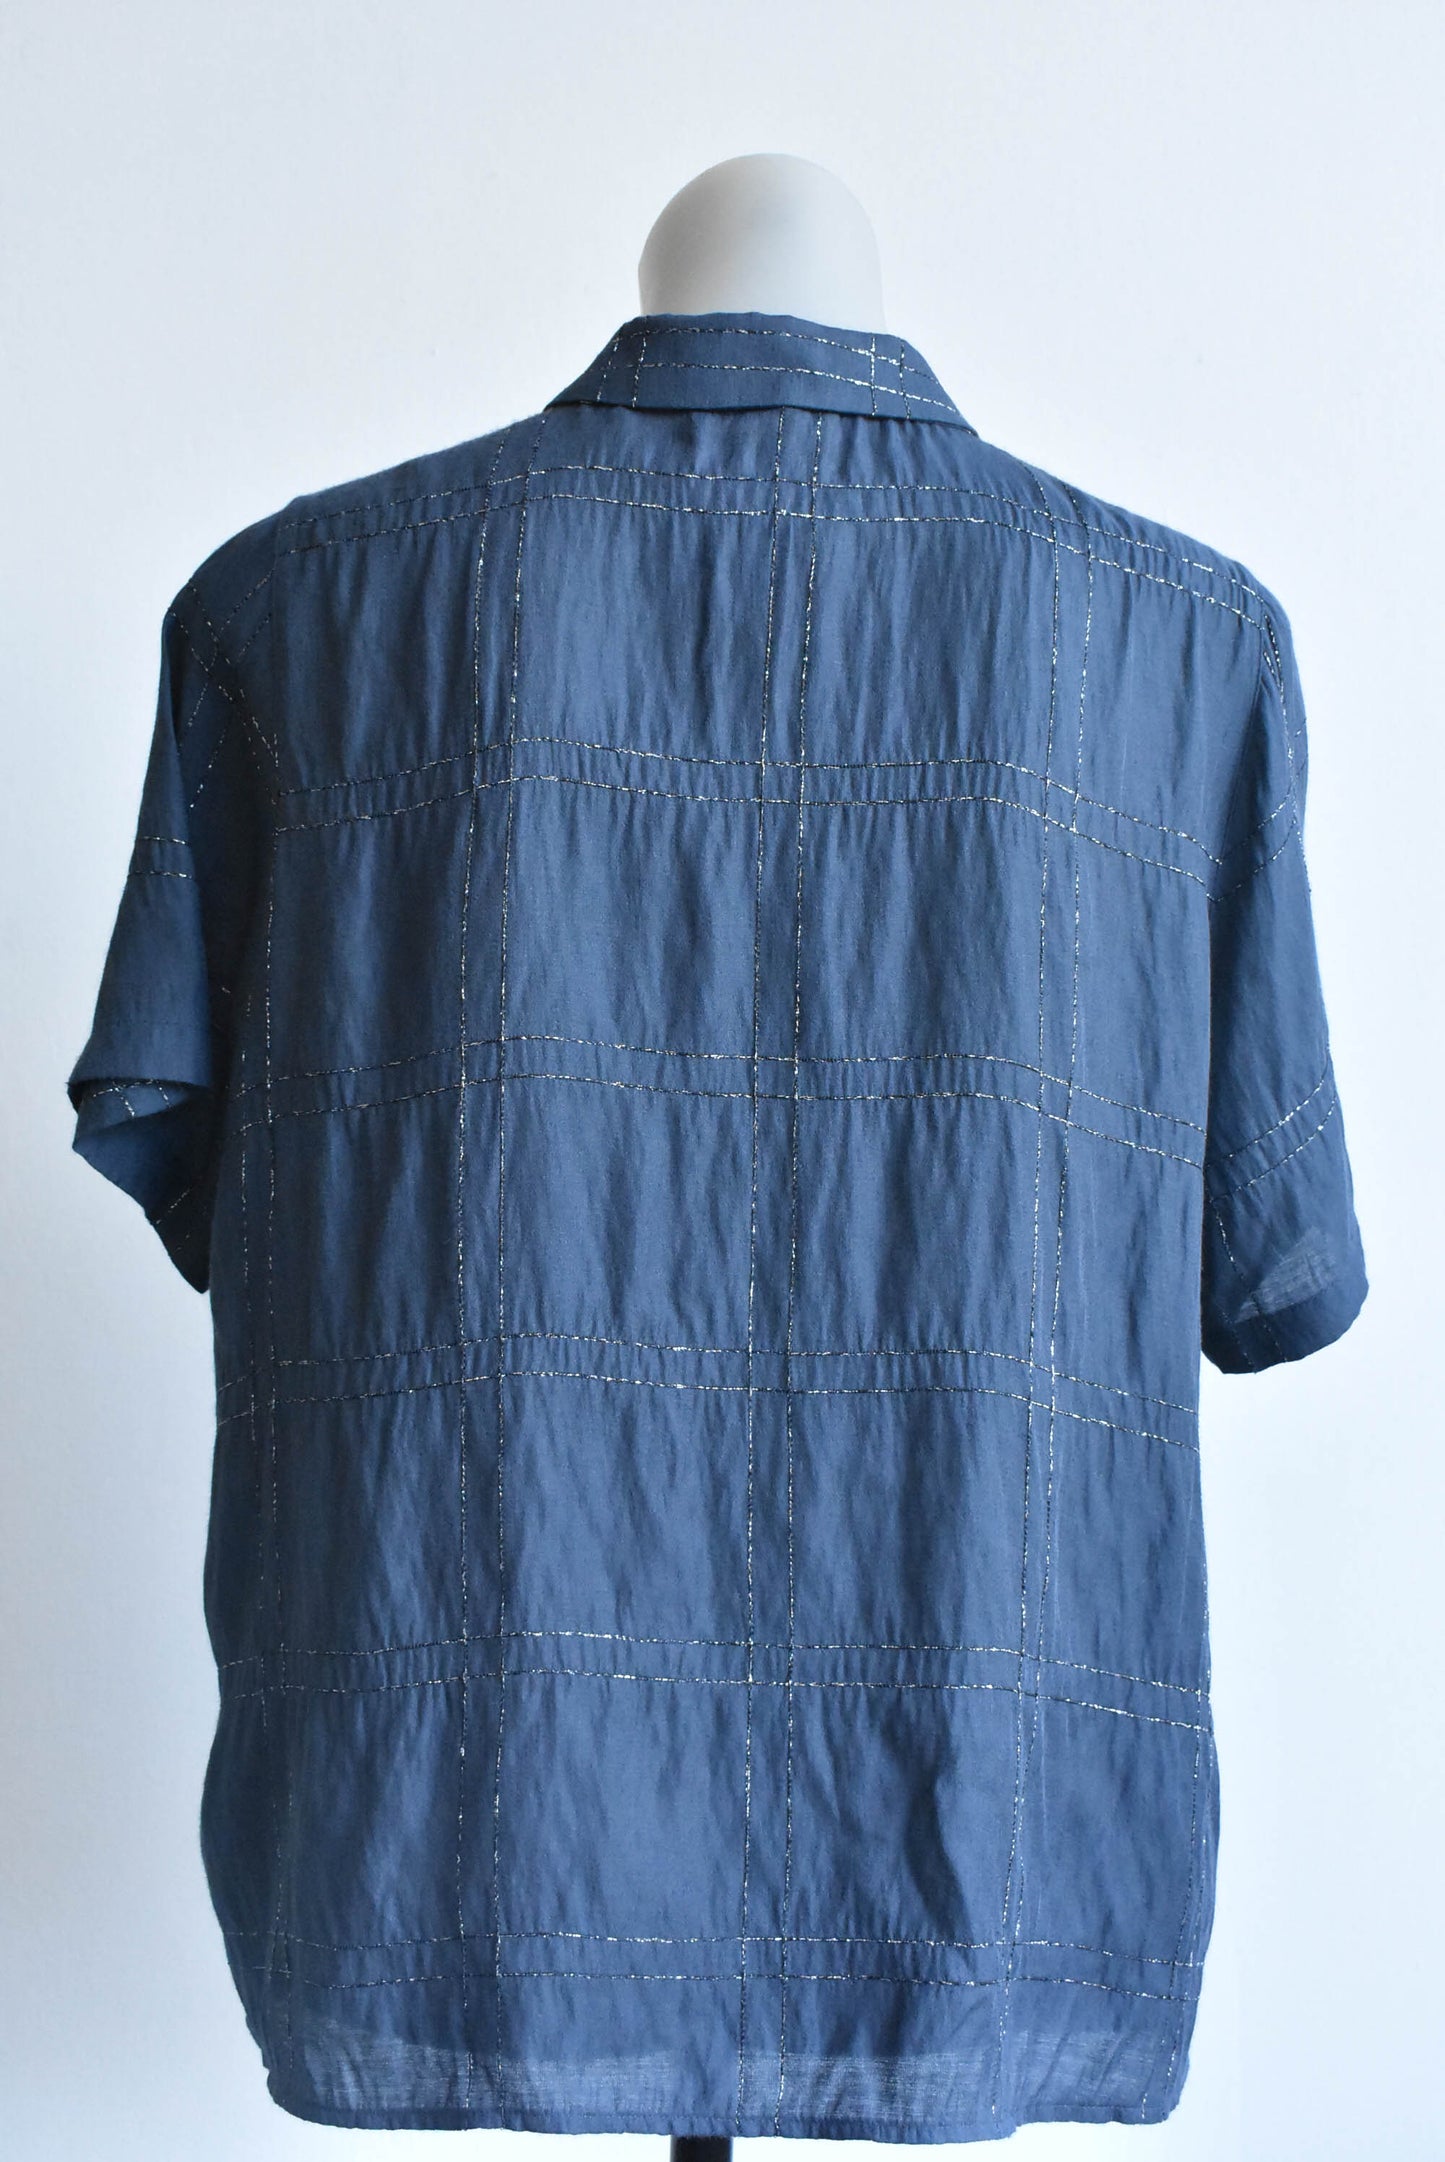 Indigo Collection blue metallic plaid shirt, size 14